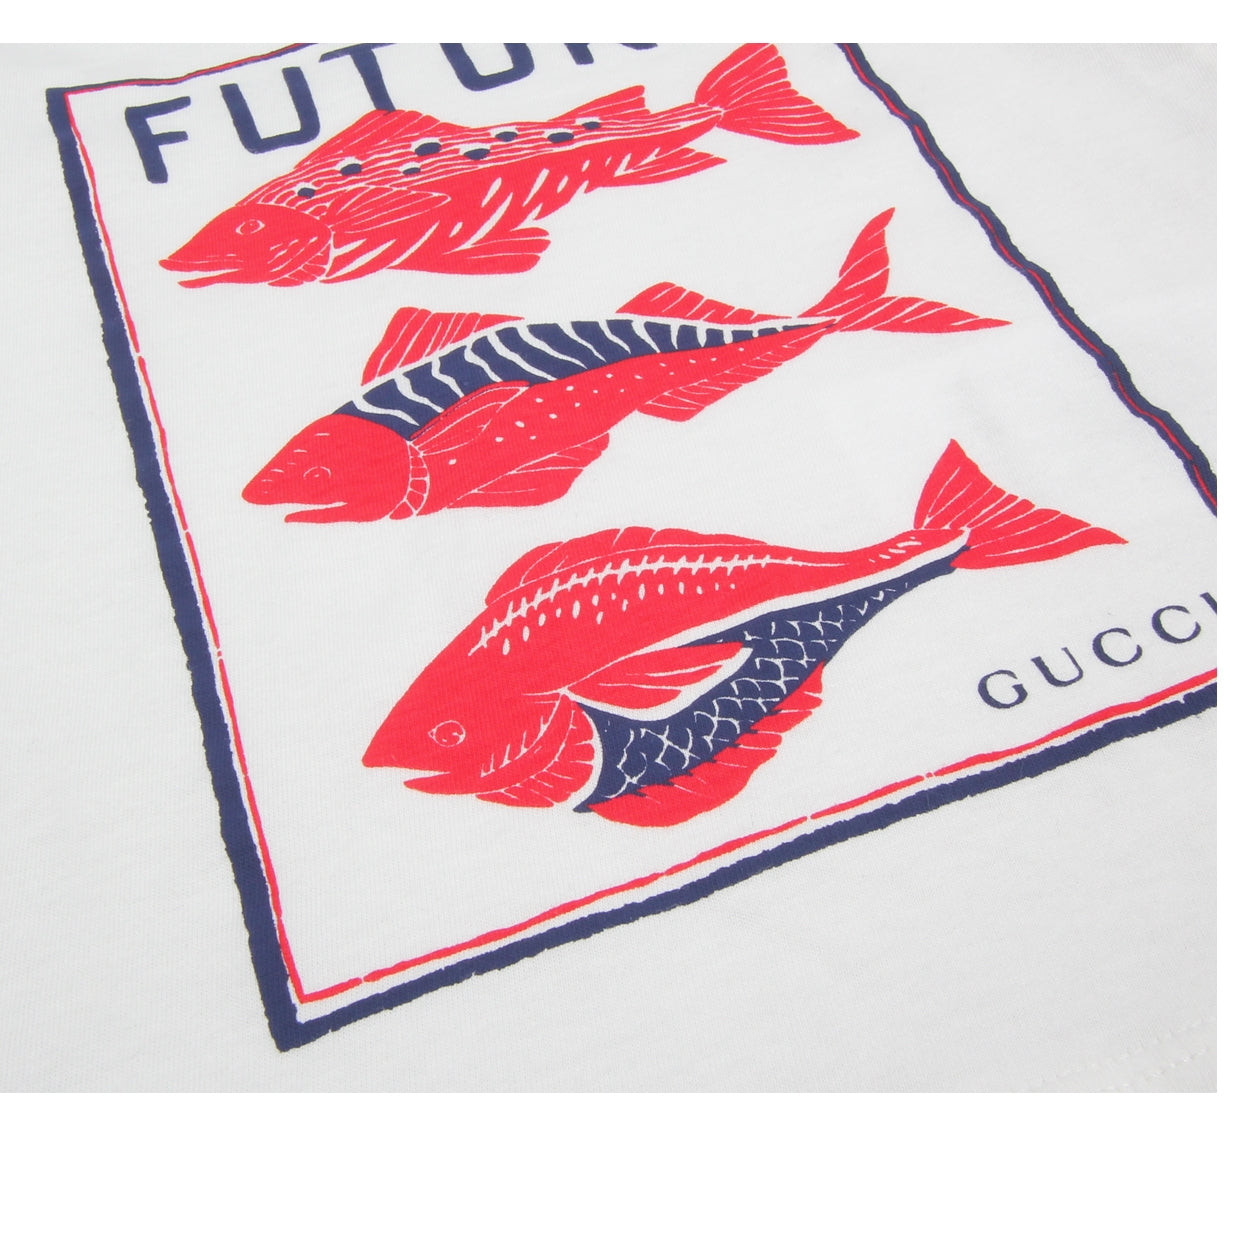 Gucci Baby Fish Print White T-Shirt - Retro Designer Wear